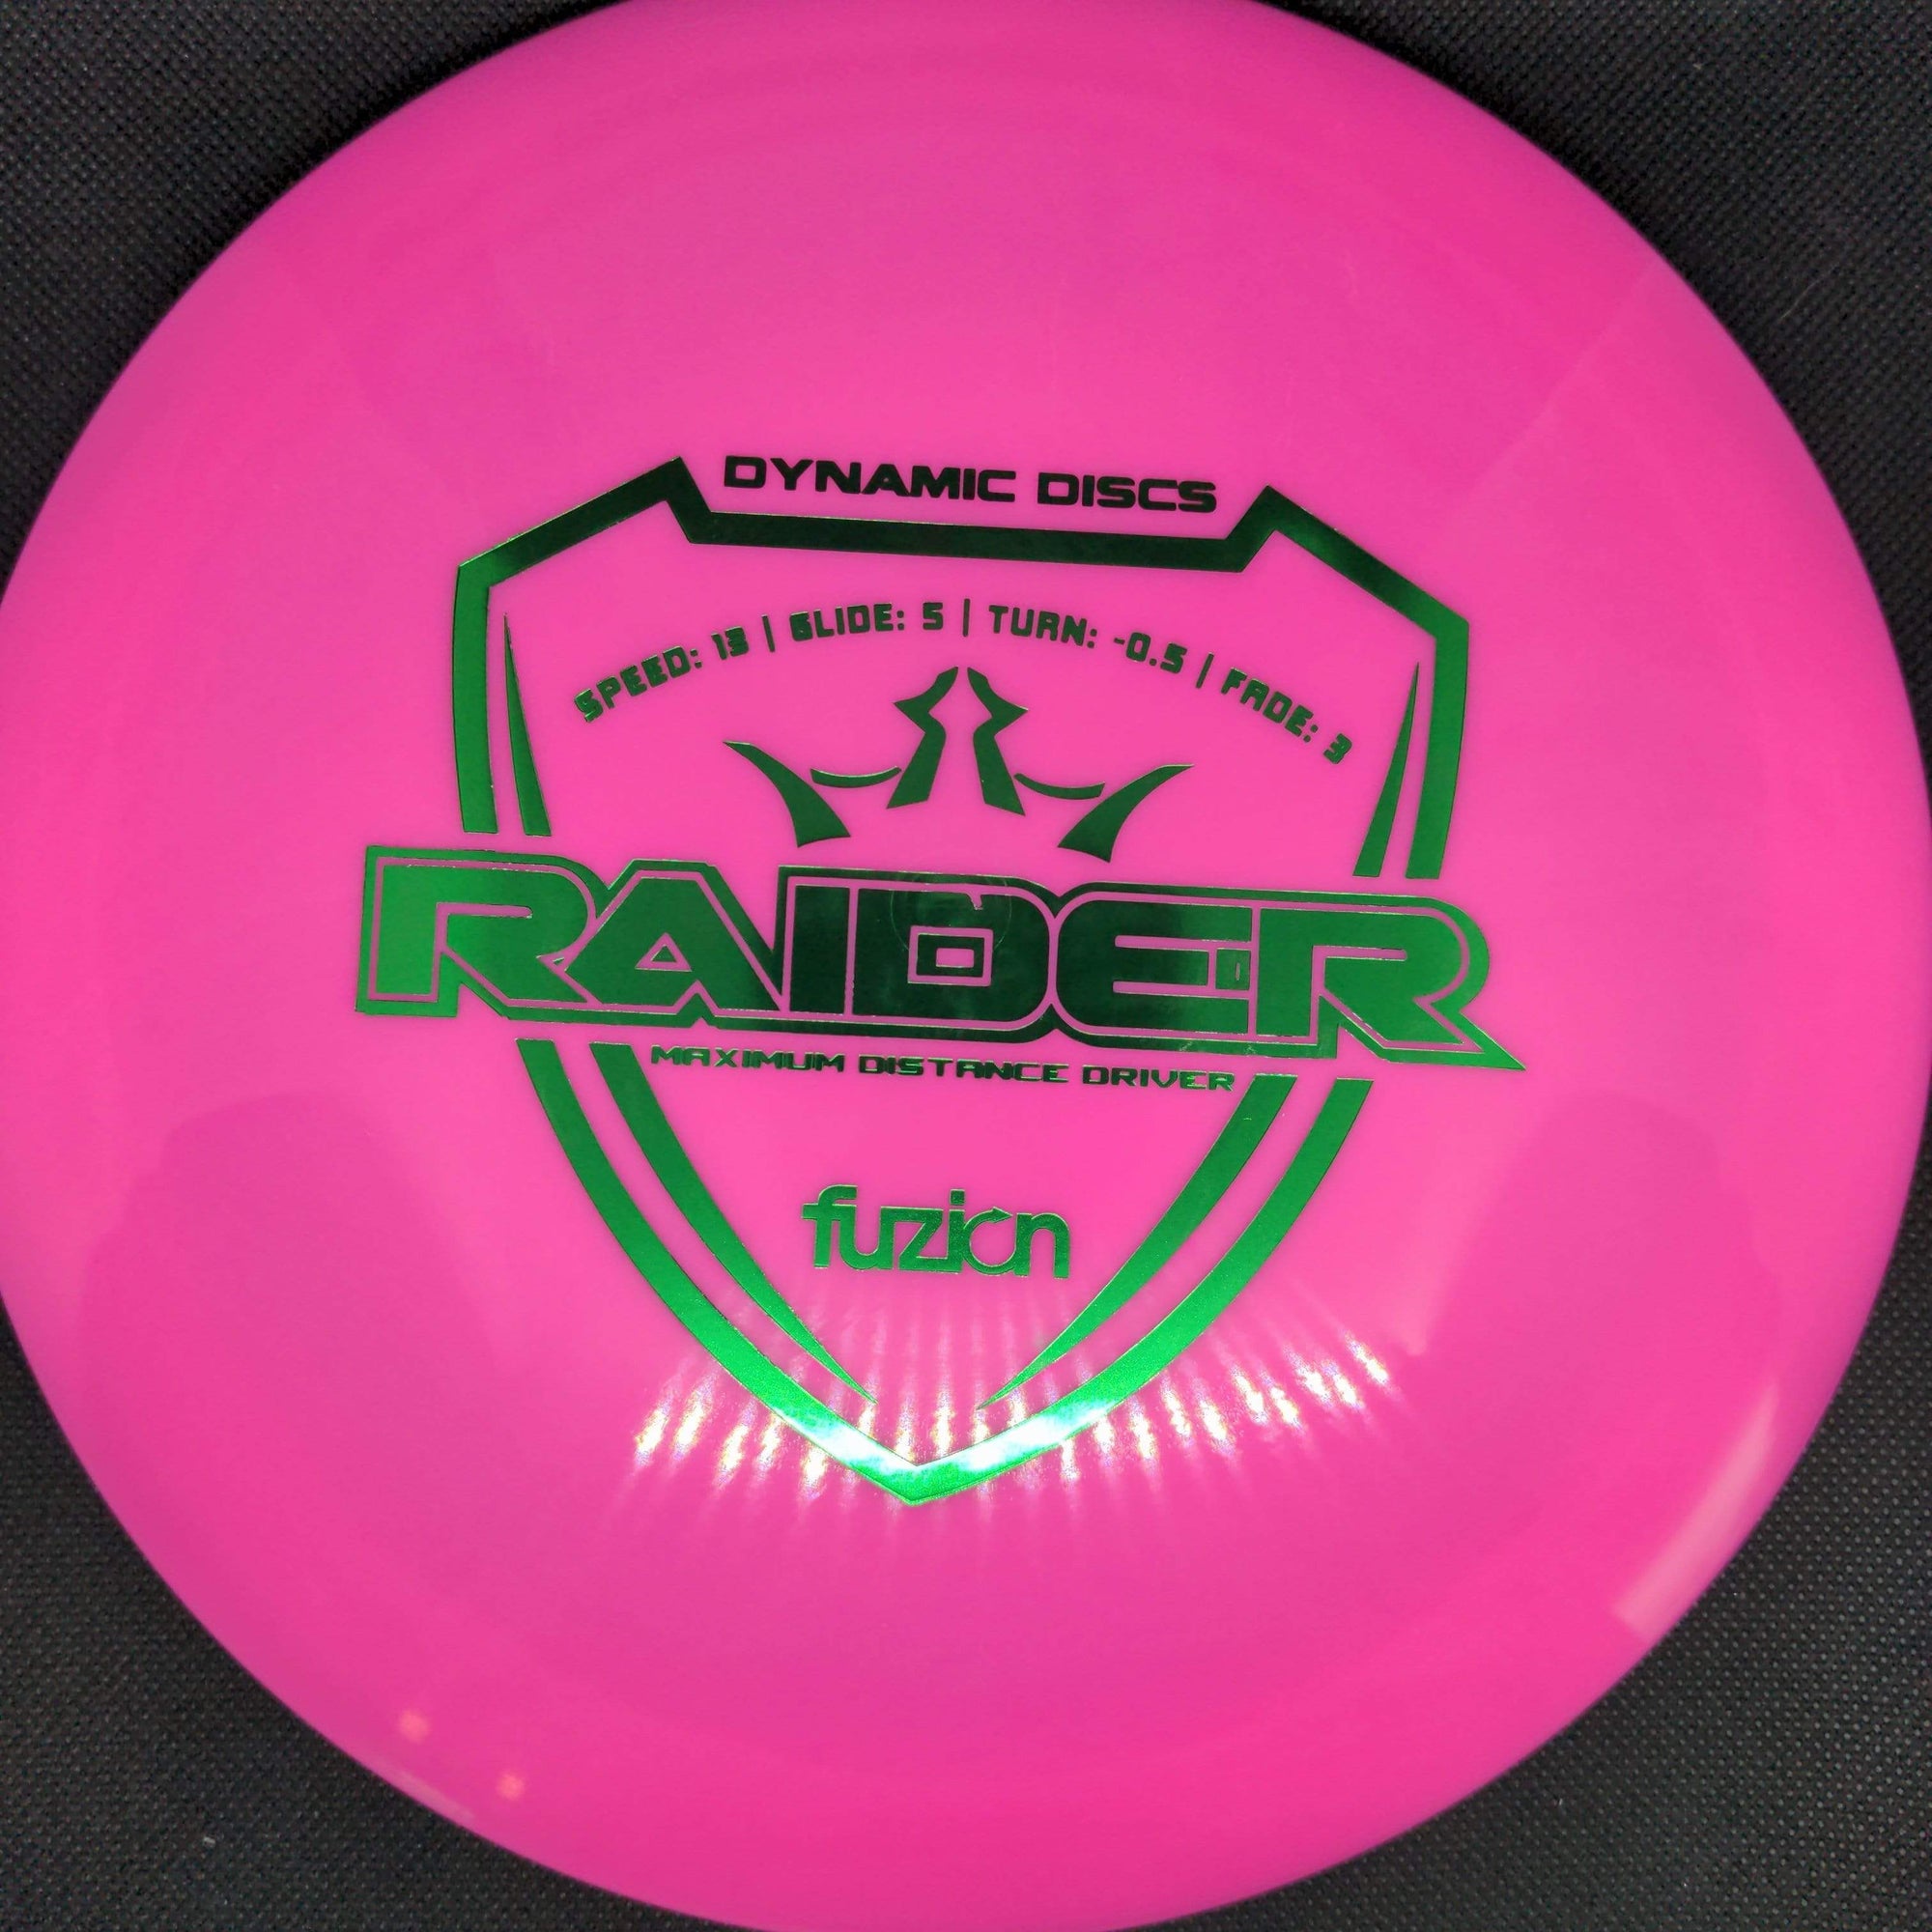 Dynamic Discs Distance Driver Pink, Green Stamp 173g Fuzion Raider